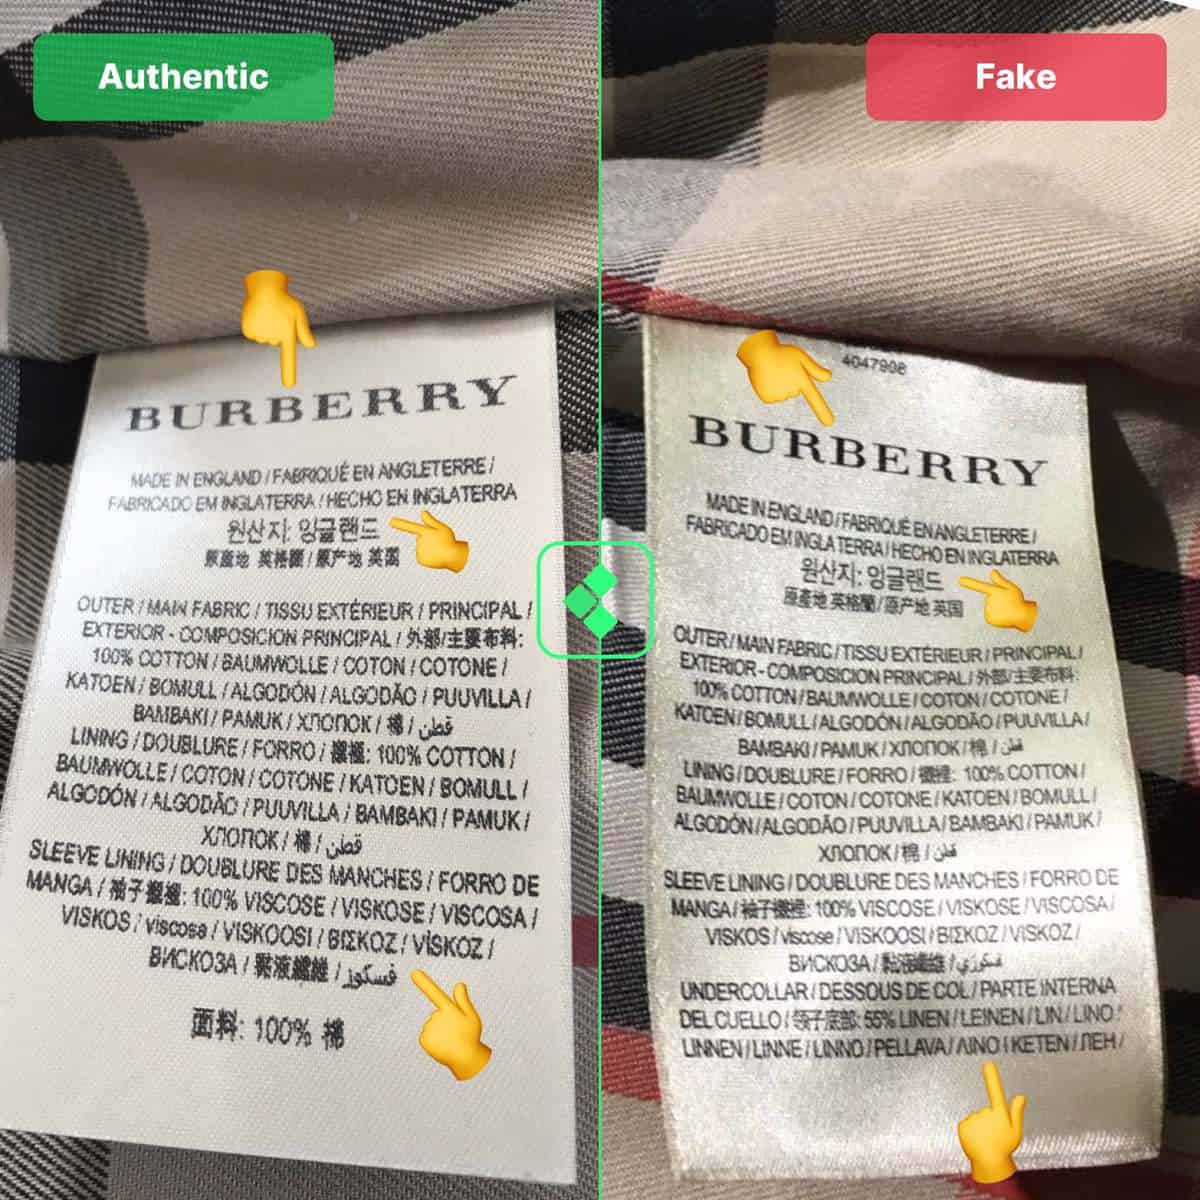 Burberry belt legit check, is it real or fake? : r/LegitCheck